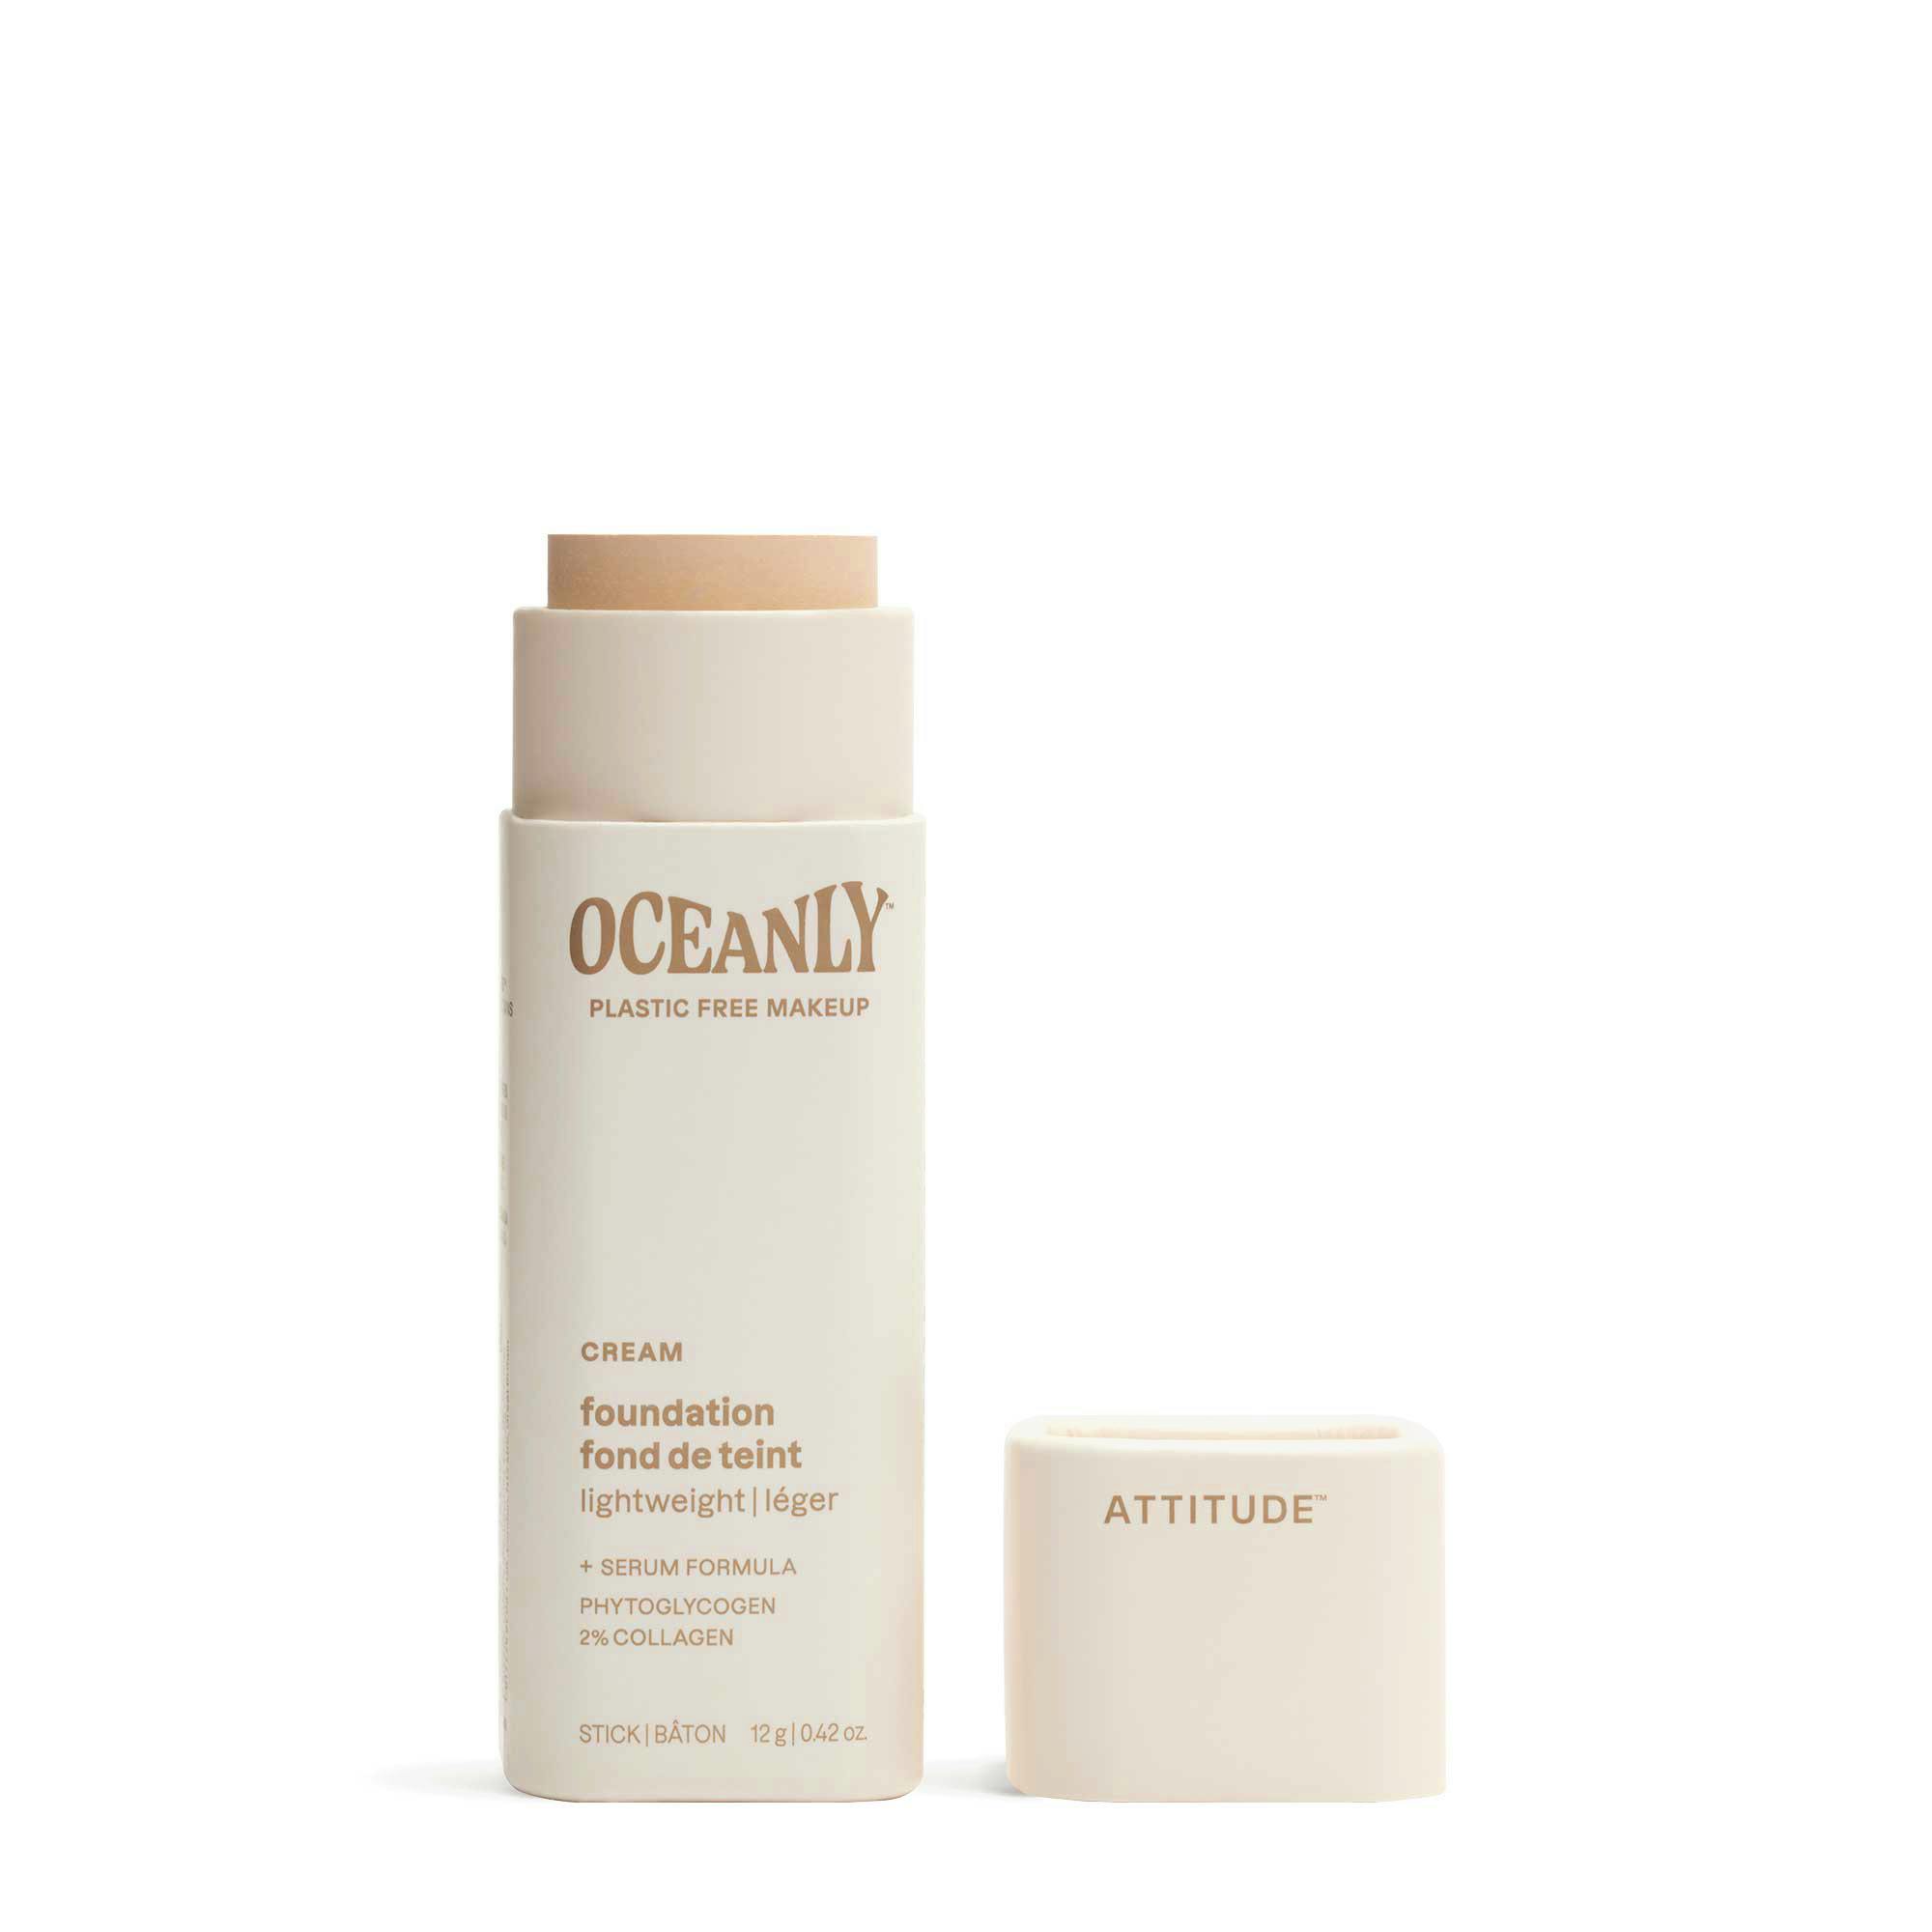 Oceanly Light Coverage Foundation Cream 12 g